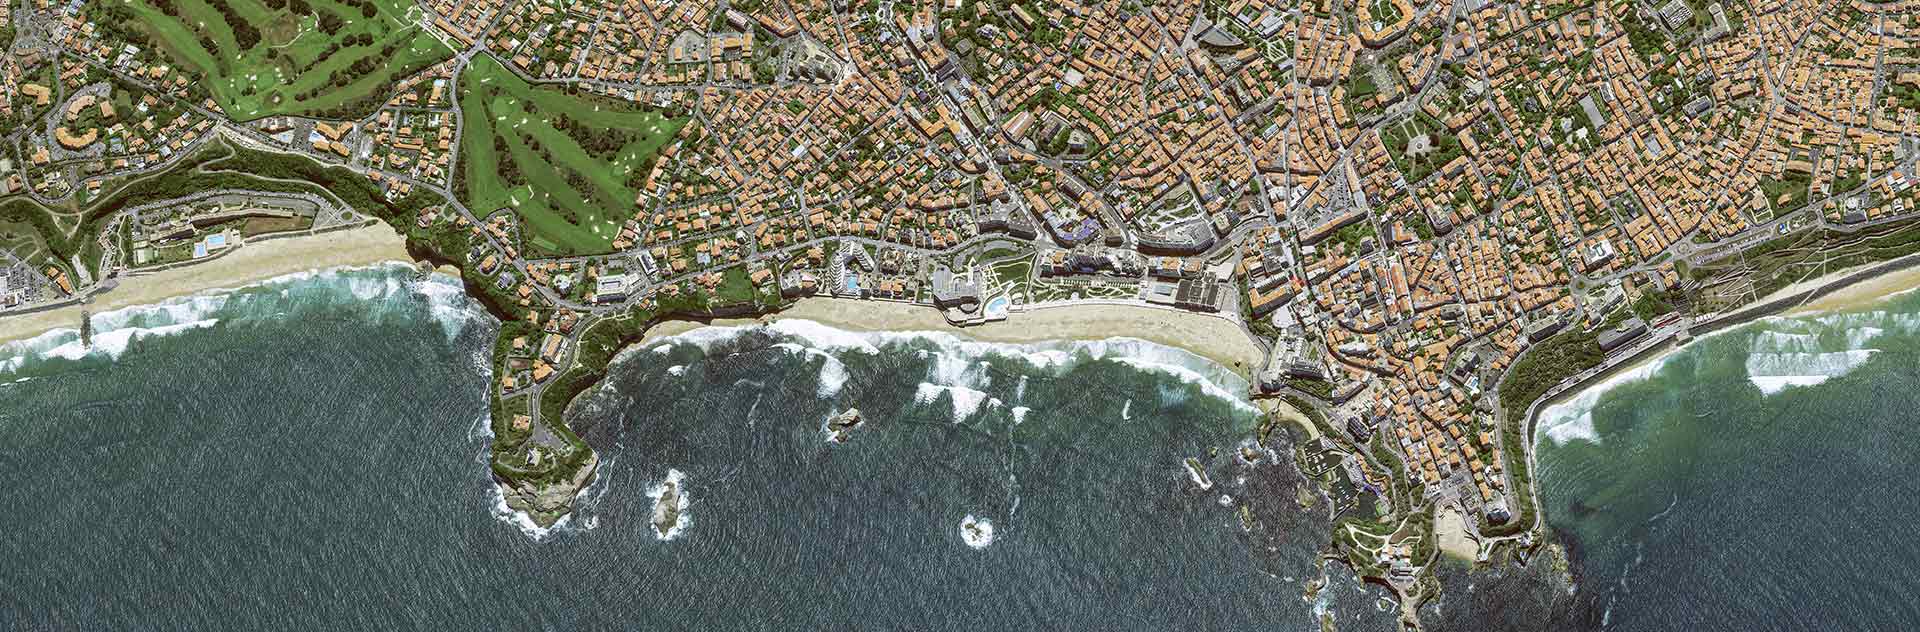 Pléiades Neo Biarritz - 30cm resolution - Coastal erosion